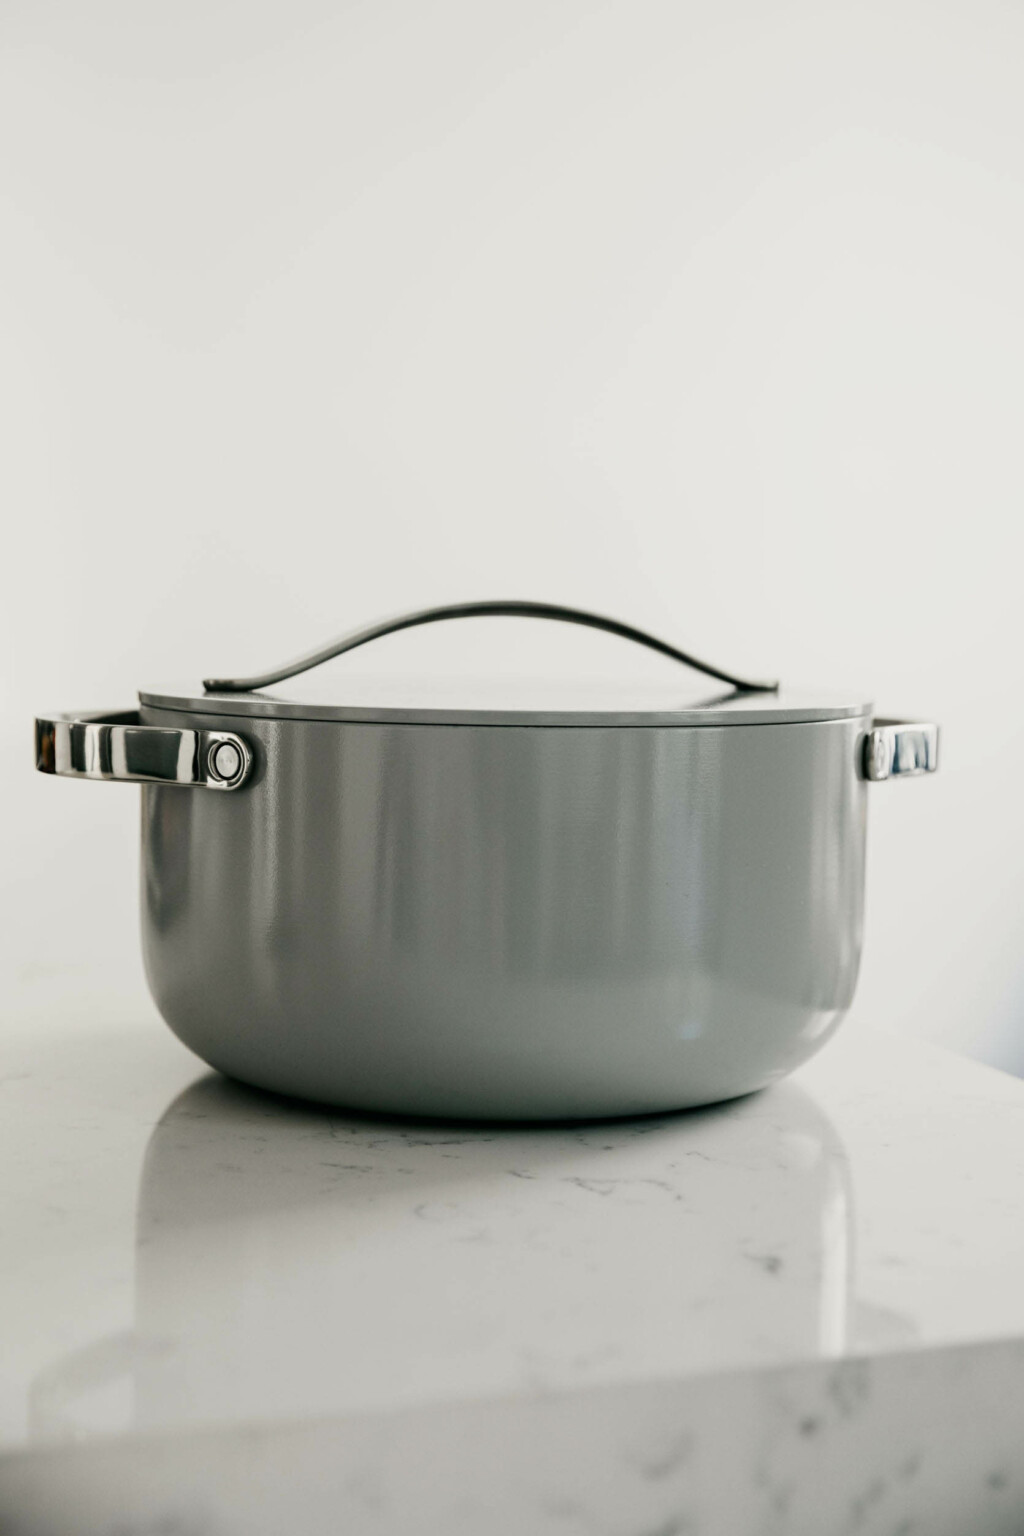 Caraway Cookware Review (Frying Pan & Dutch Oven w/ Lids)